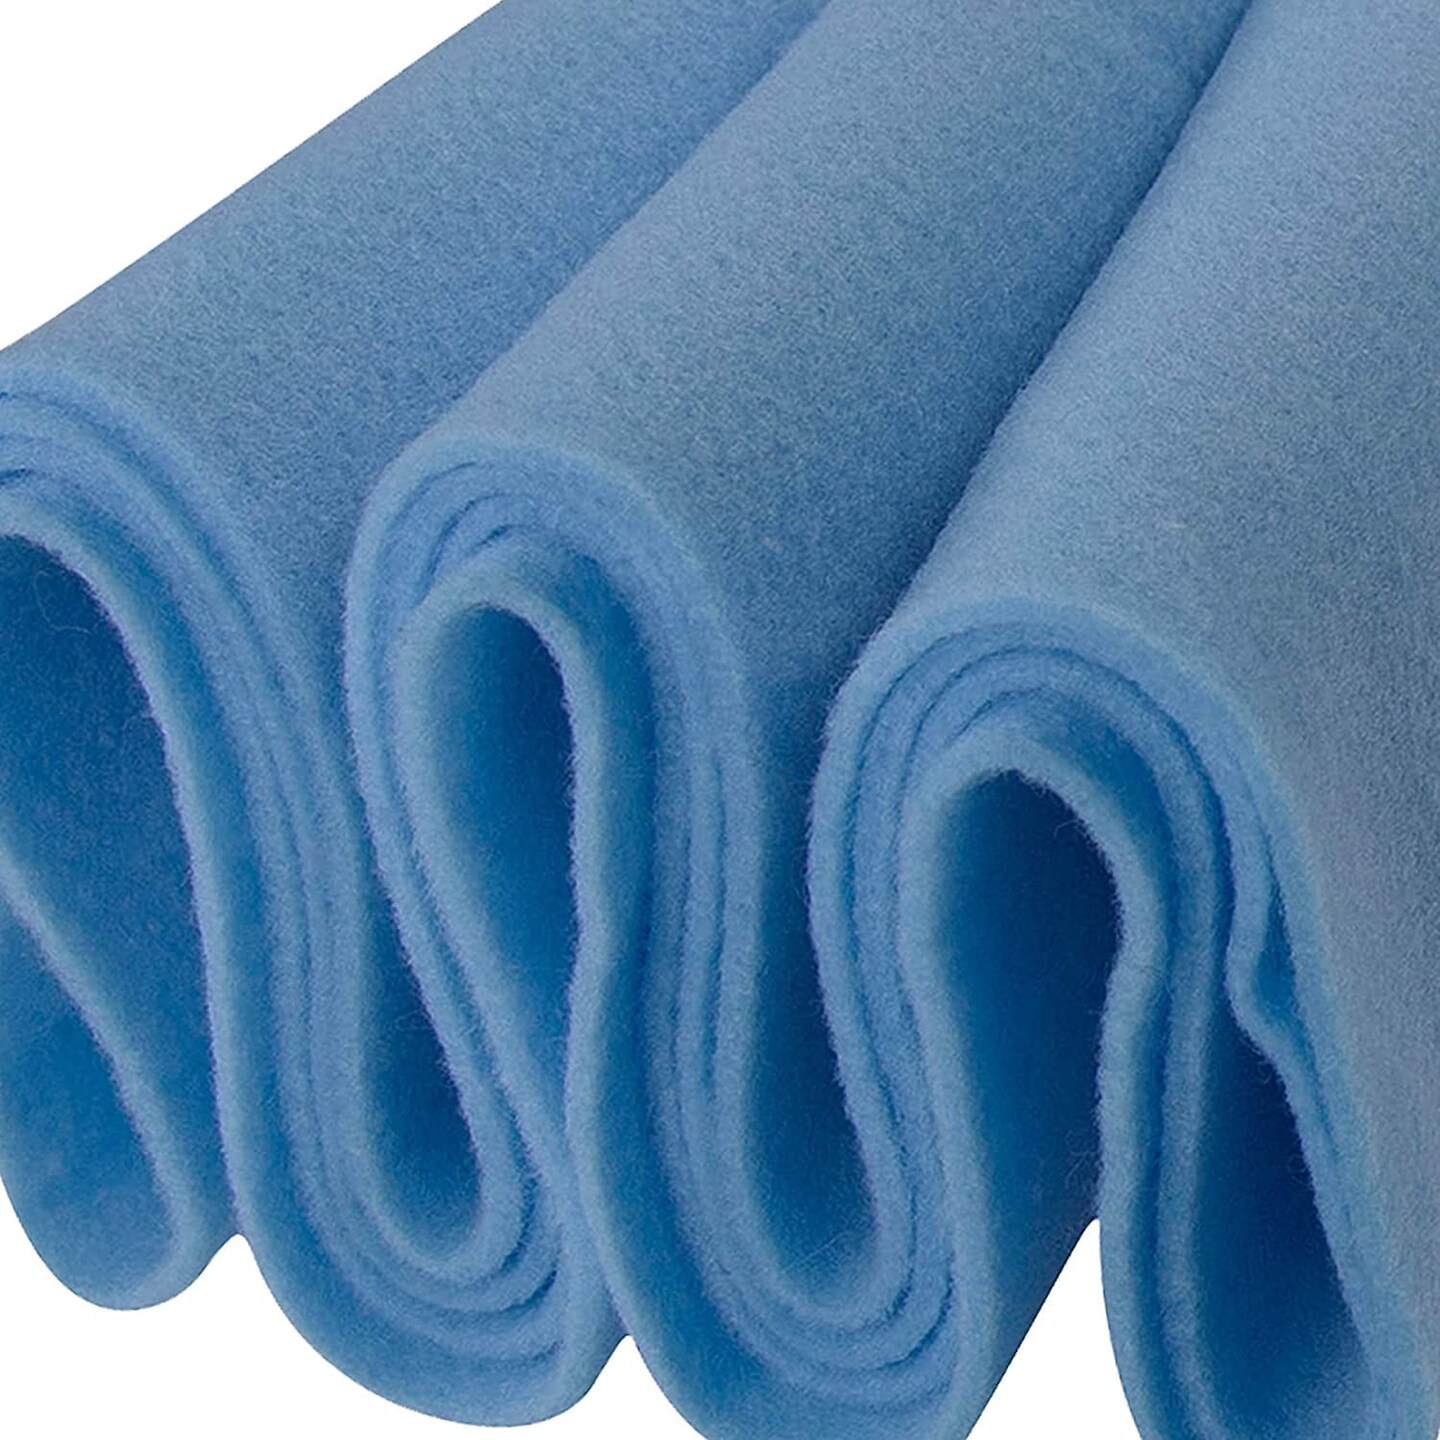 FabricLA Acrylic Felt Fabric - 72 Inch Wide 1.6mm Thick Felt by The Yard -  Use Felt Sheets for Sewing, Cushion and Padding, DIY Arts & Crafts - Baby  Blue, 1 Yard